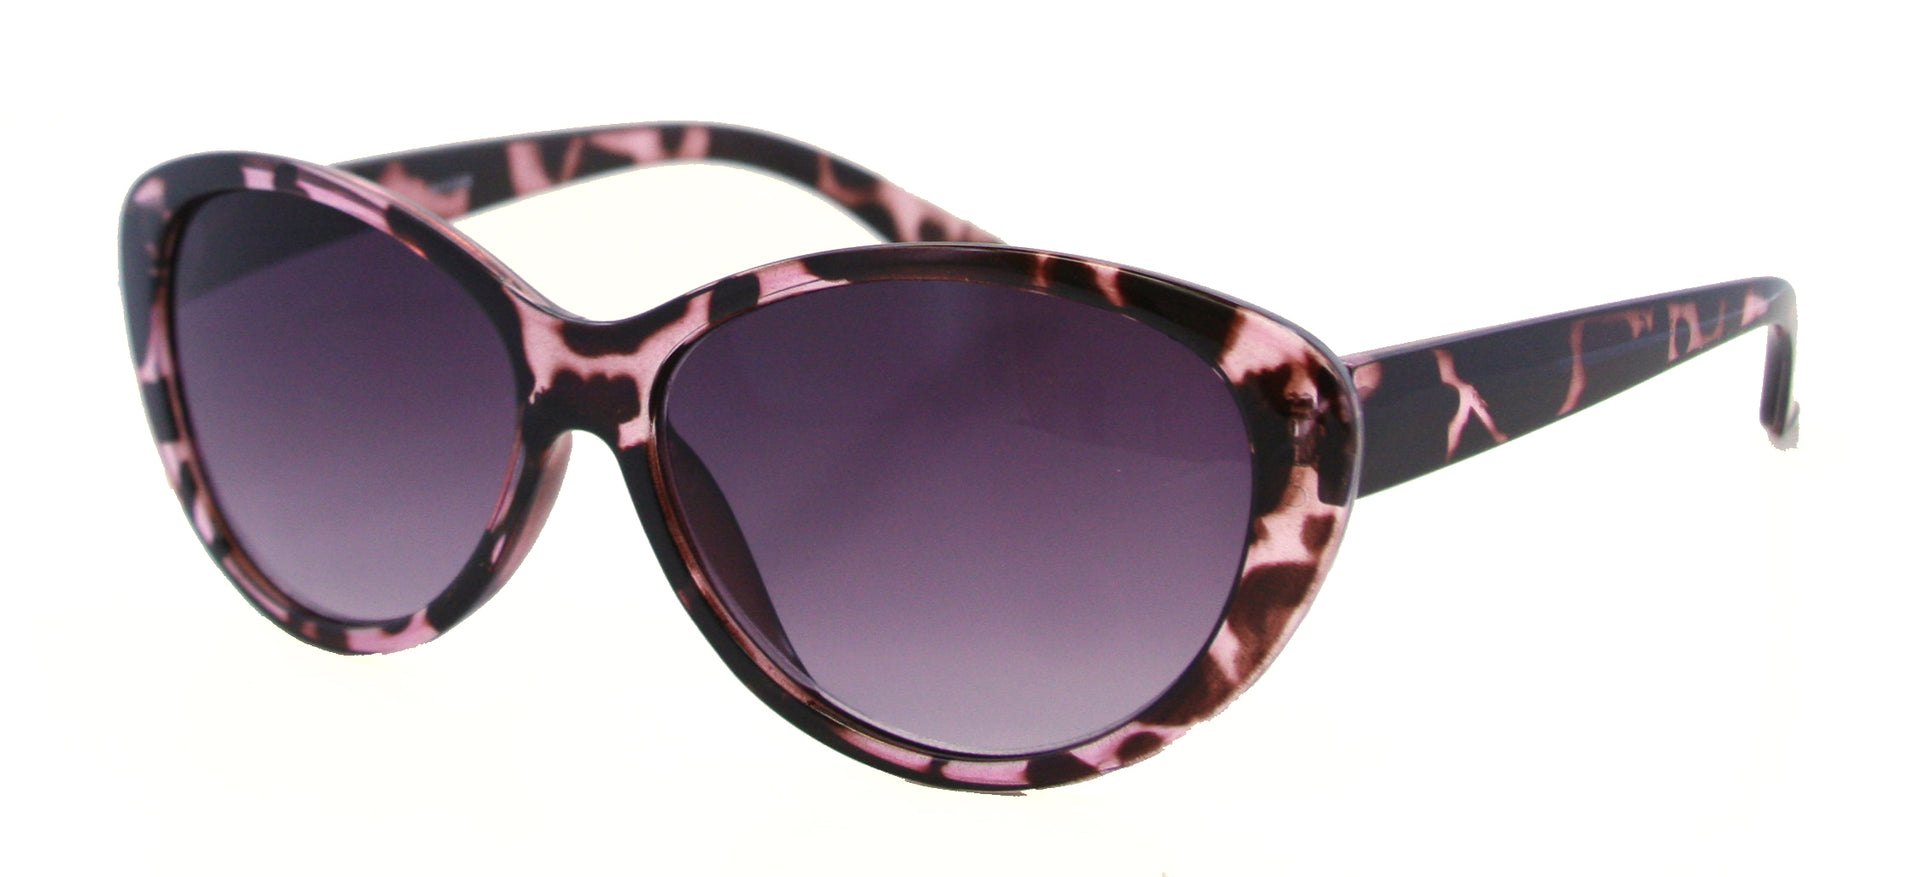 8112SR - Wholesale Women's Cat Eye Style Reading Sunglasses in Tortoise